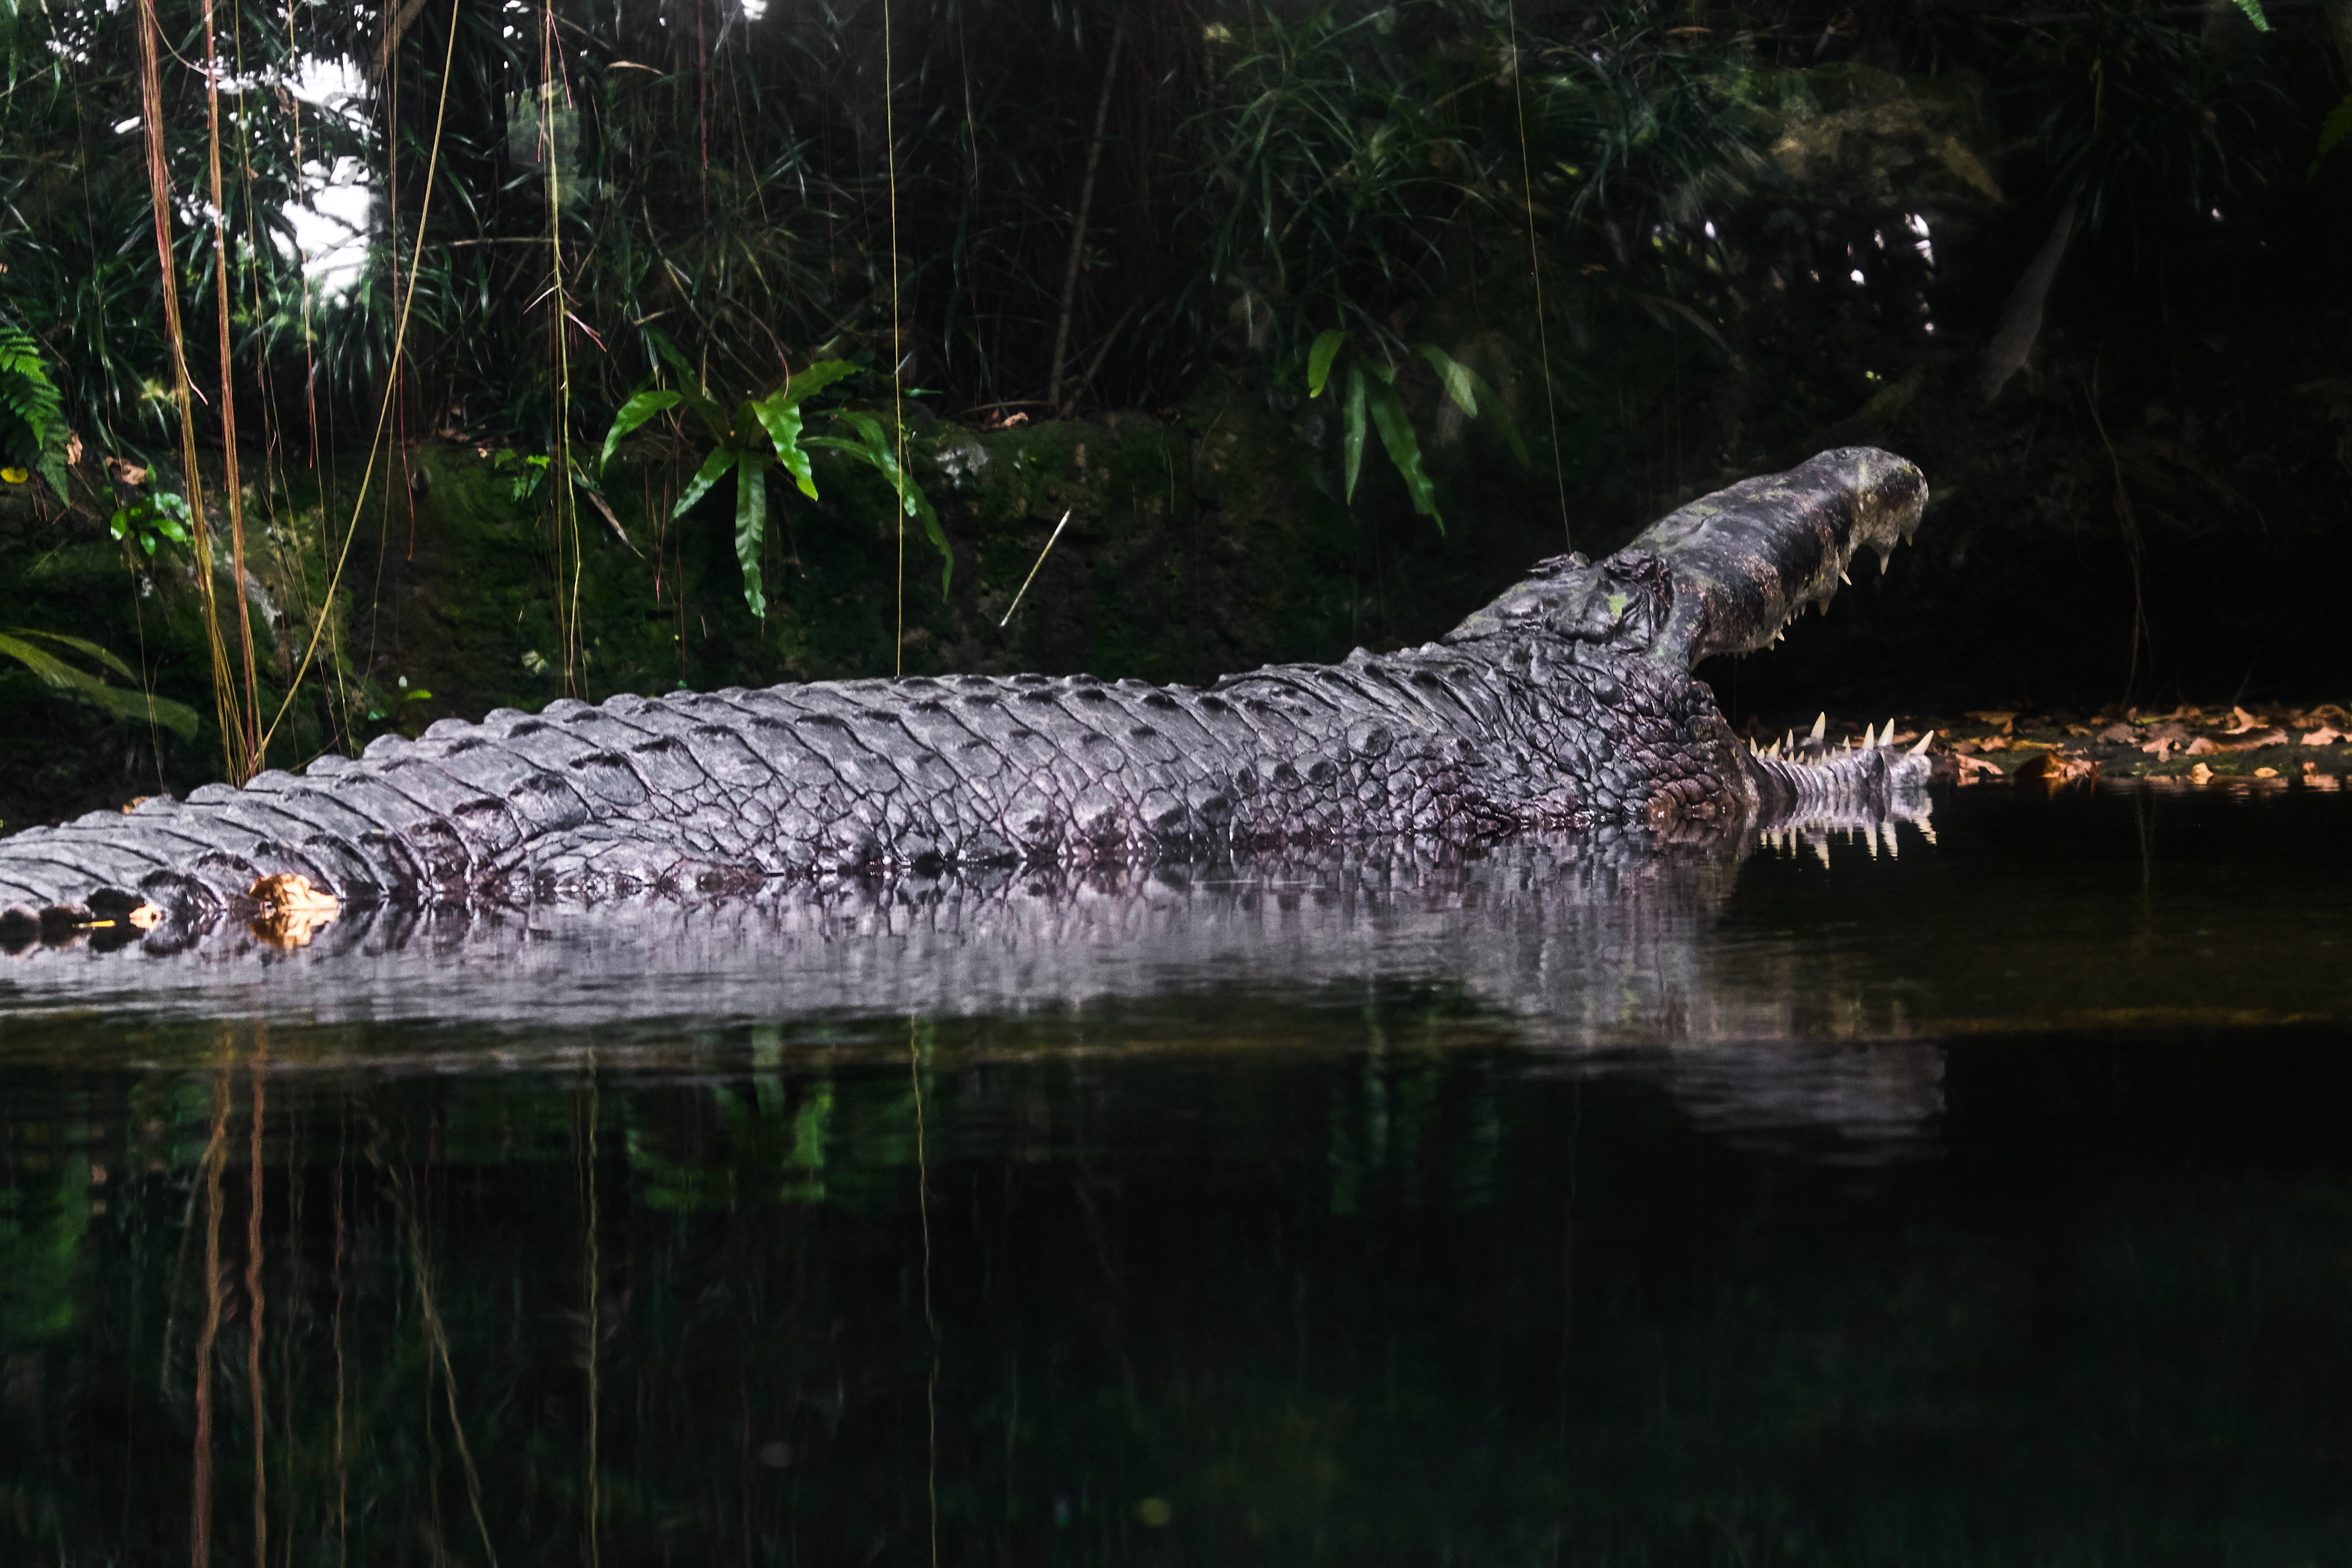 Monster Crocodile Nabbed in Australia: did It Get So Big? | Live Science